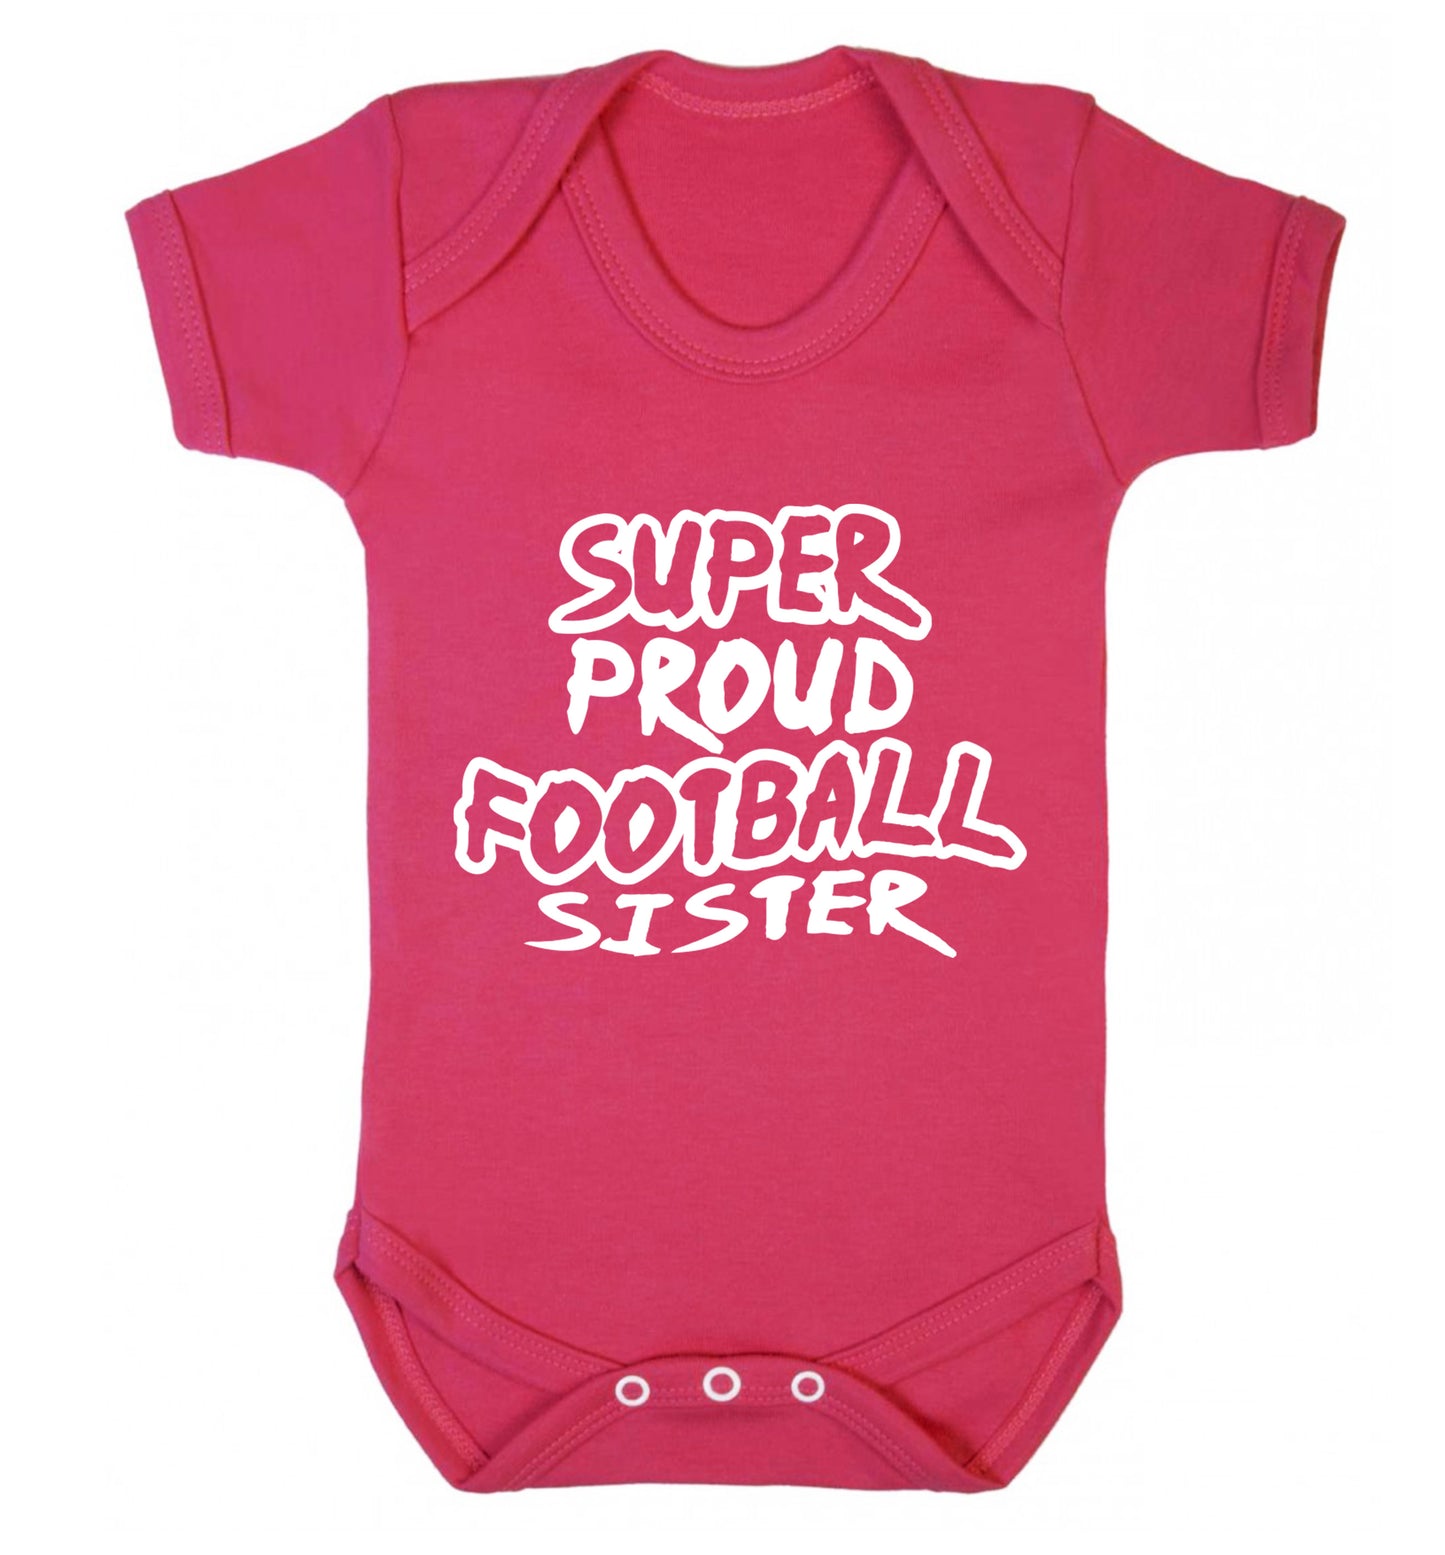 Super proud football sister Baby Vest dark pink 18-24 months